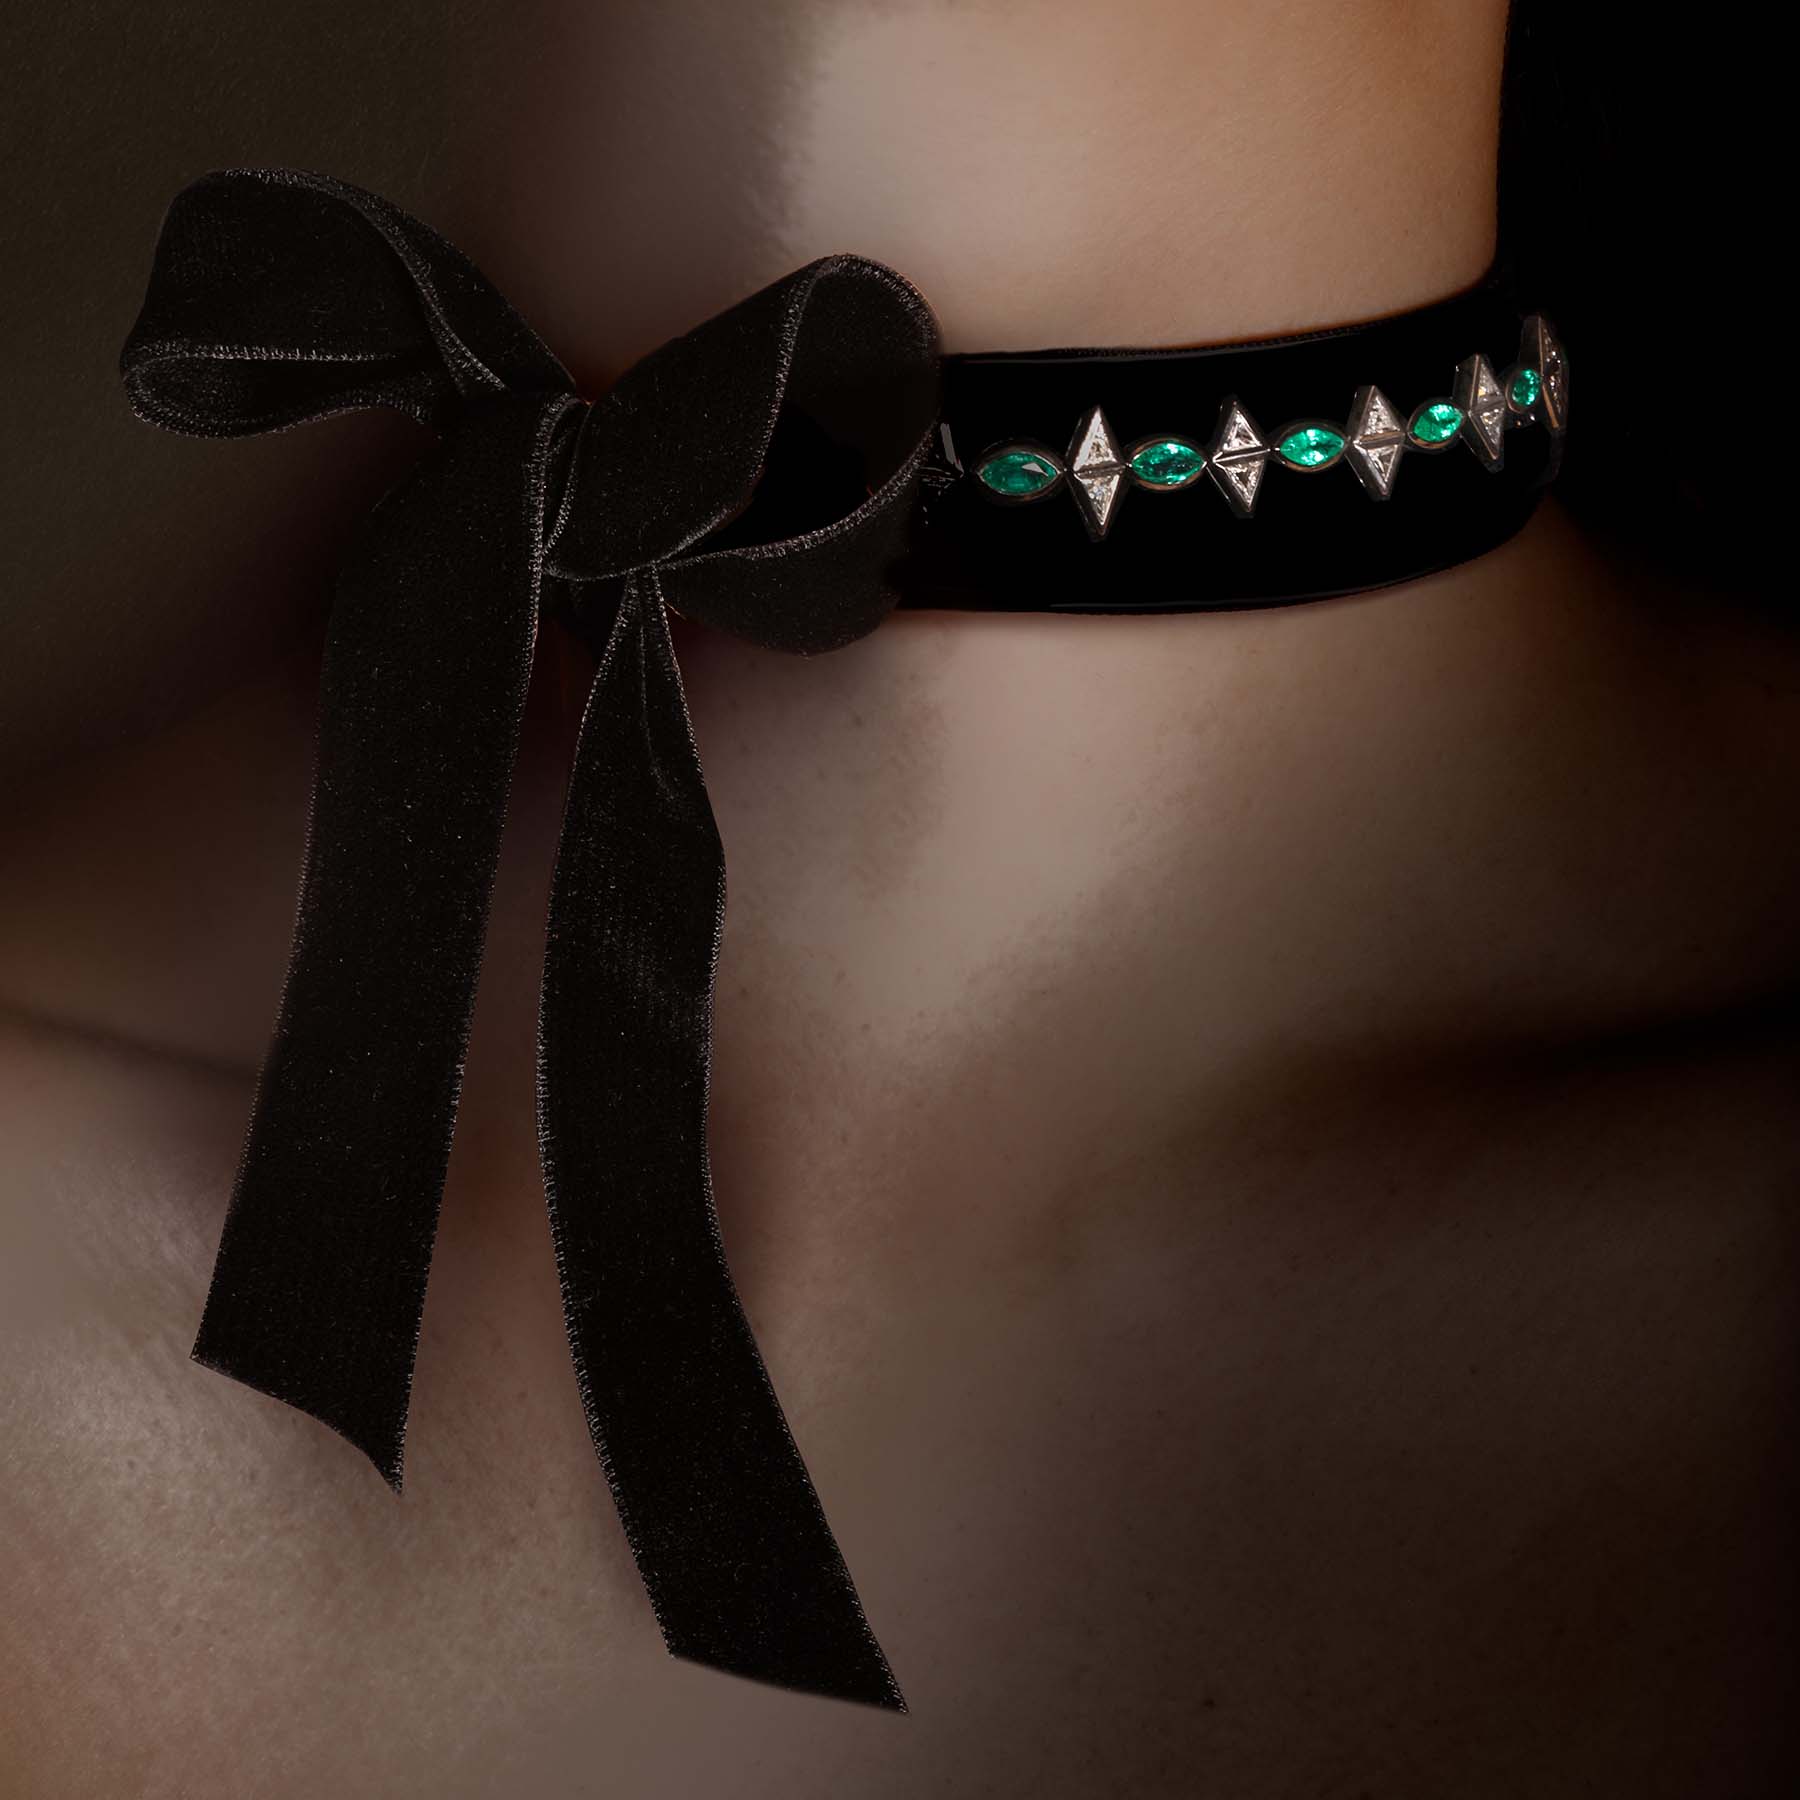 The Romantic Necklace by Solange Azagury-Partridge - Blackened 18 carat White Gold and Emeralds & Diamonds - velvet black ribbon styling